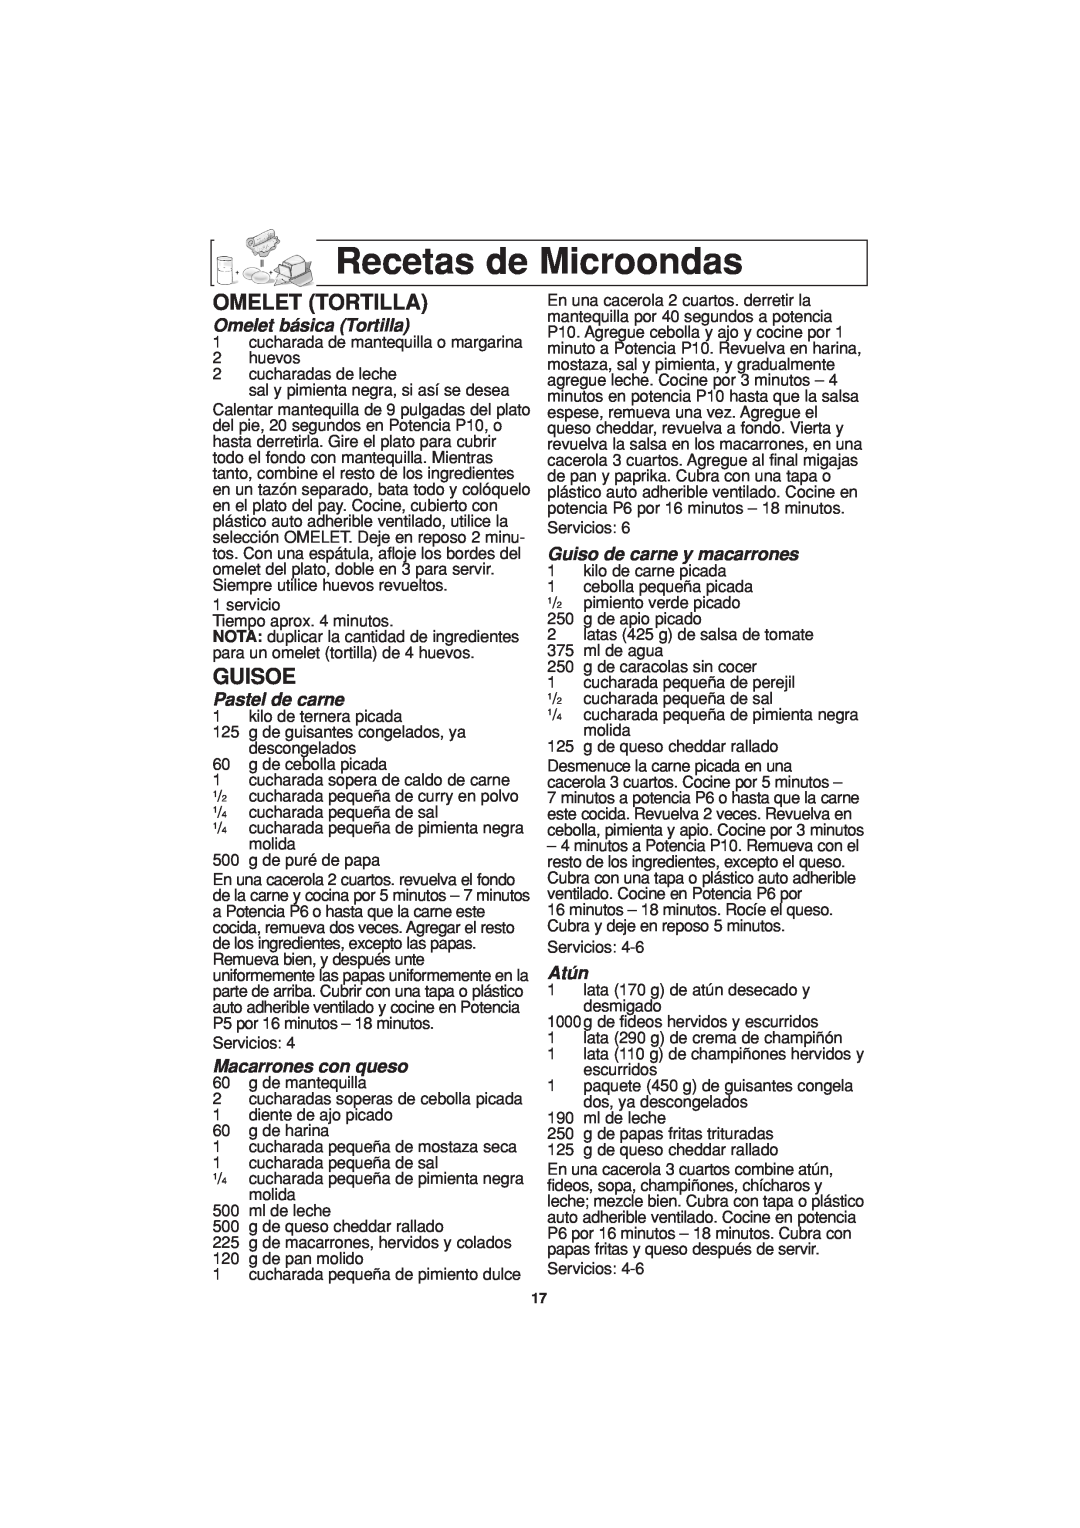 Panasonic NN-H624 Recetas de Microondas, Omelet Tortilla, Guisoe, Omelet básica Tortilla, Pastel de carne, Atún 